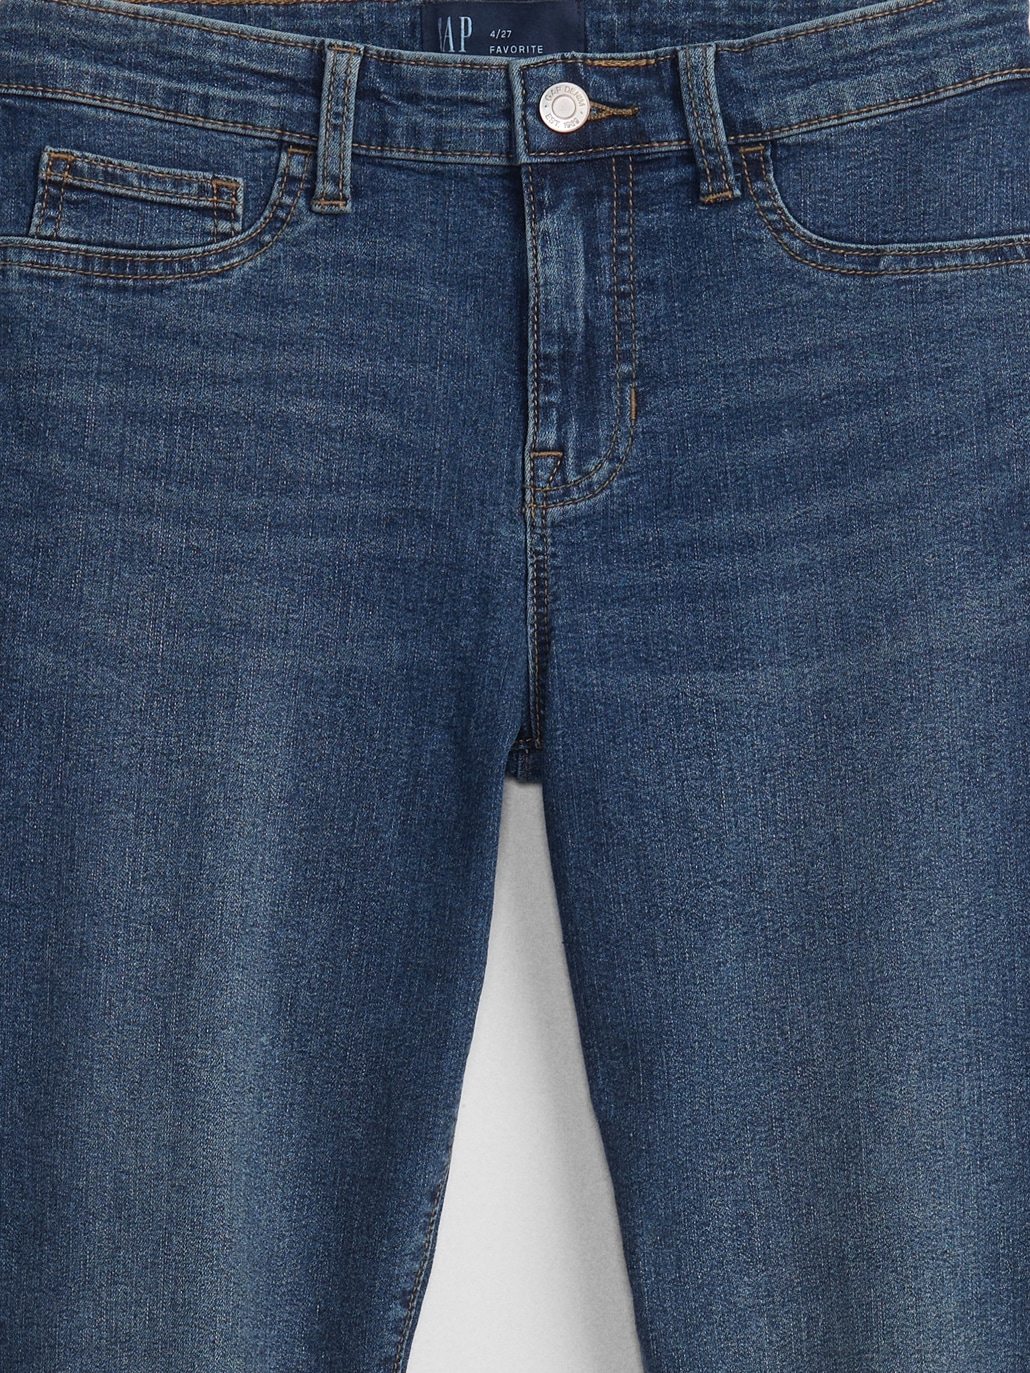 gap women's jeans sz 2/26 favorite jeggings buttons fly button fly skinny